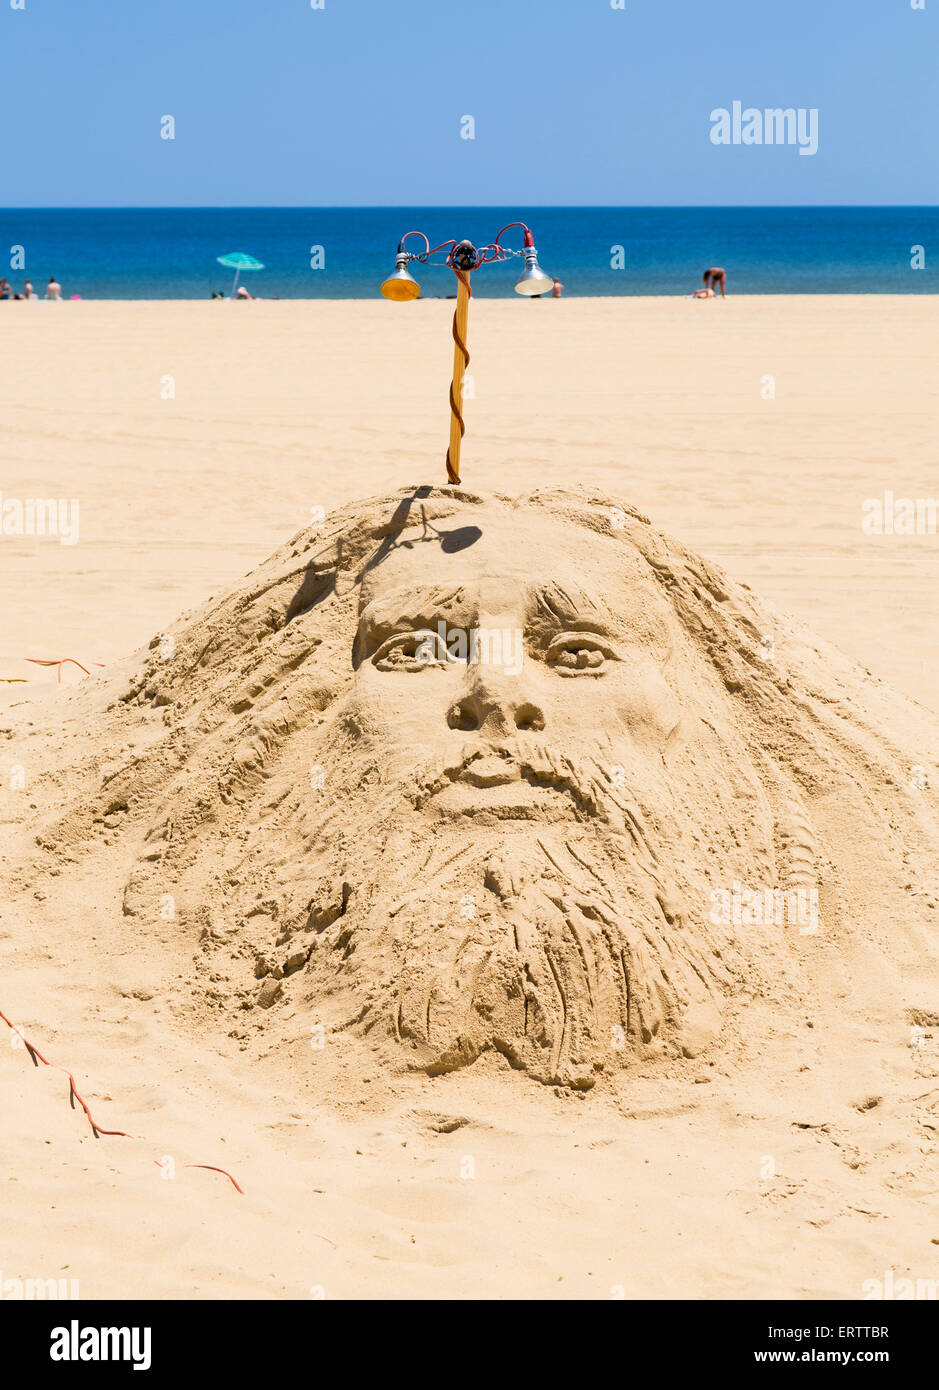 Religious sand sculpture of Jesus on beach, USA Stock Photo